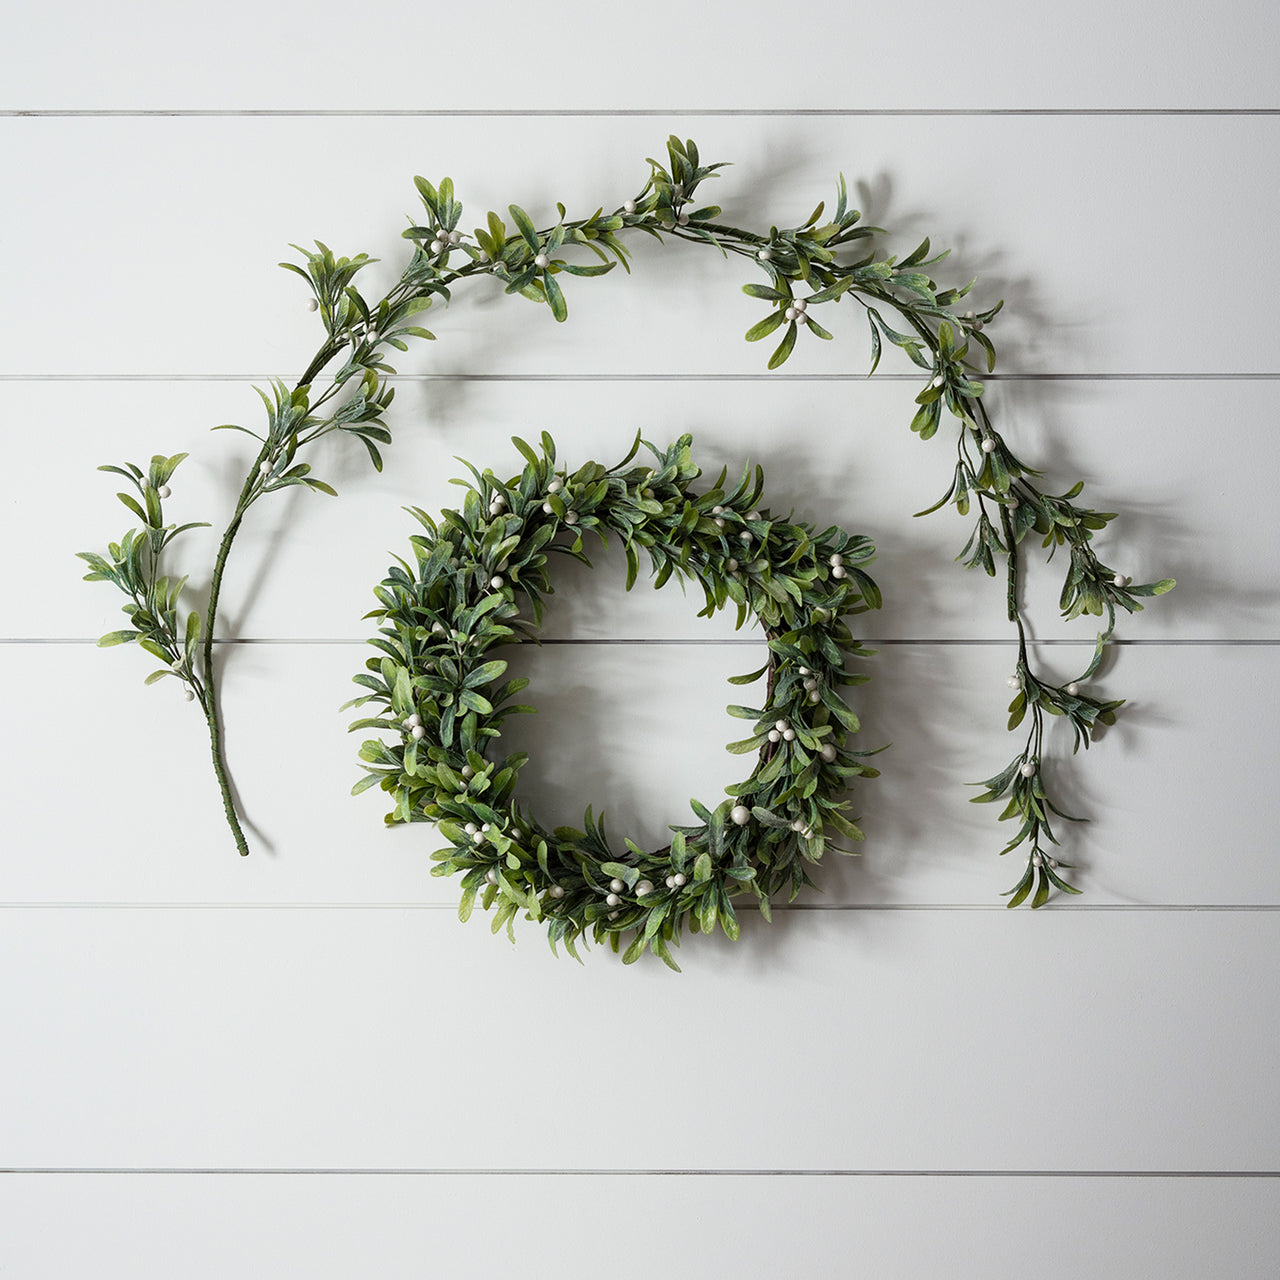 50cm Mistletoe Artificial Christmas Wreath